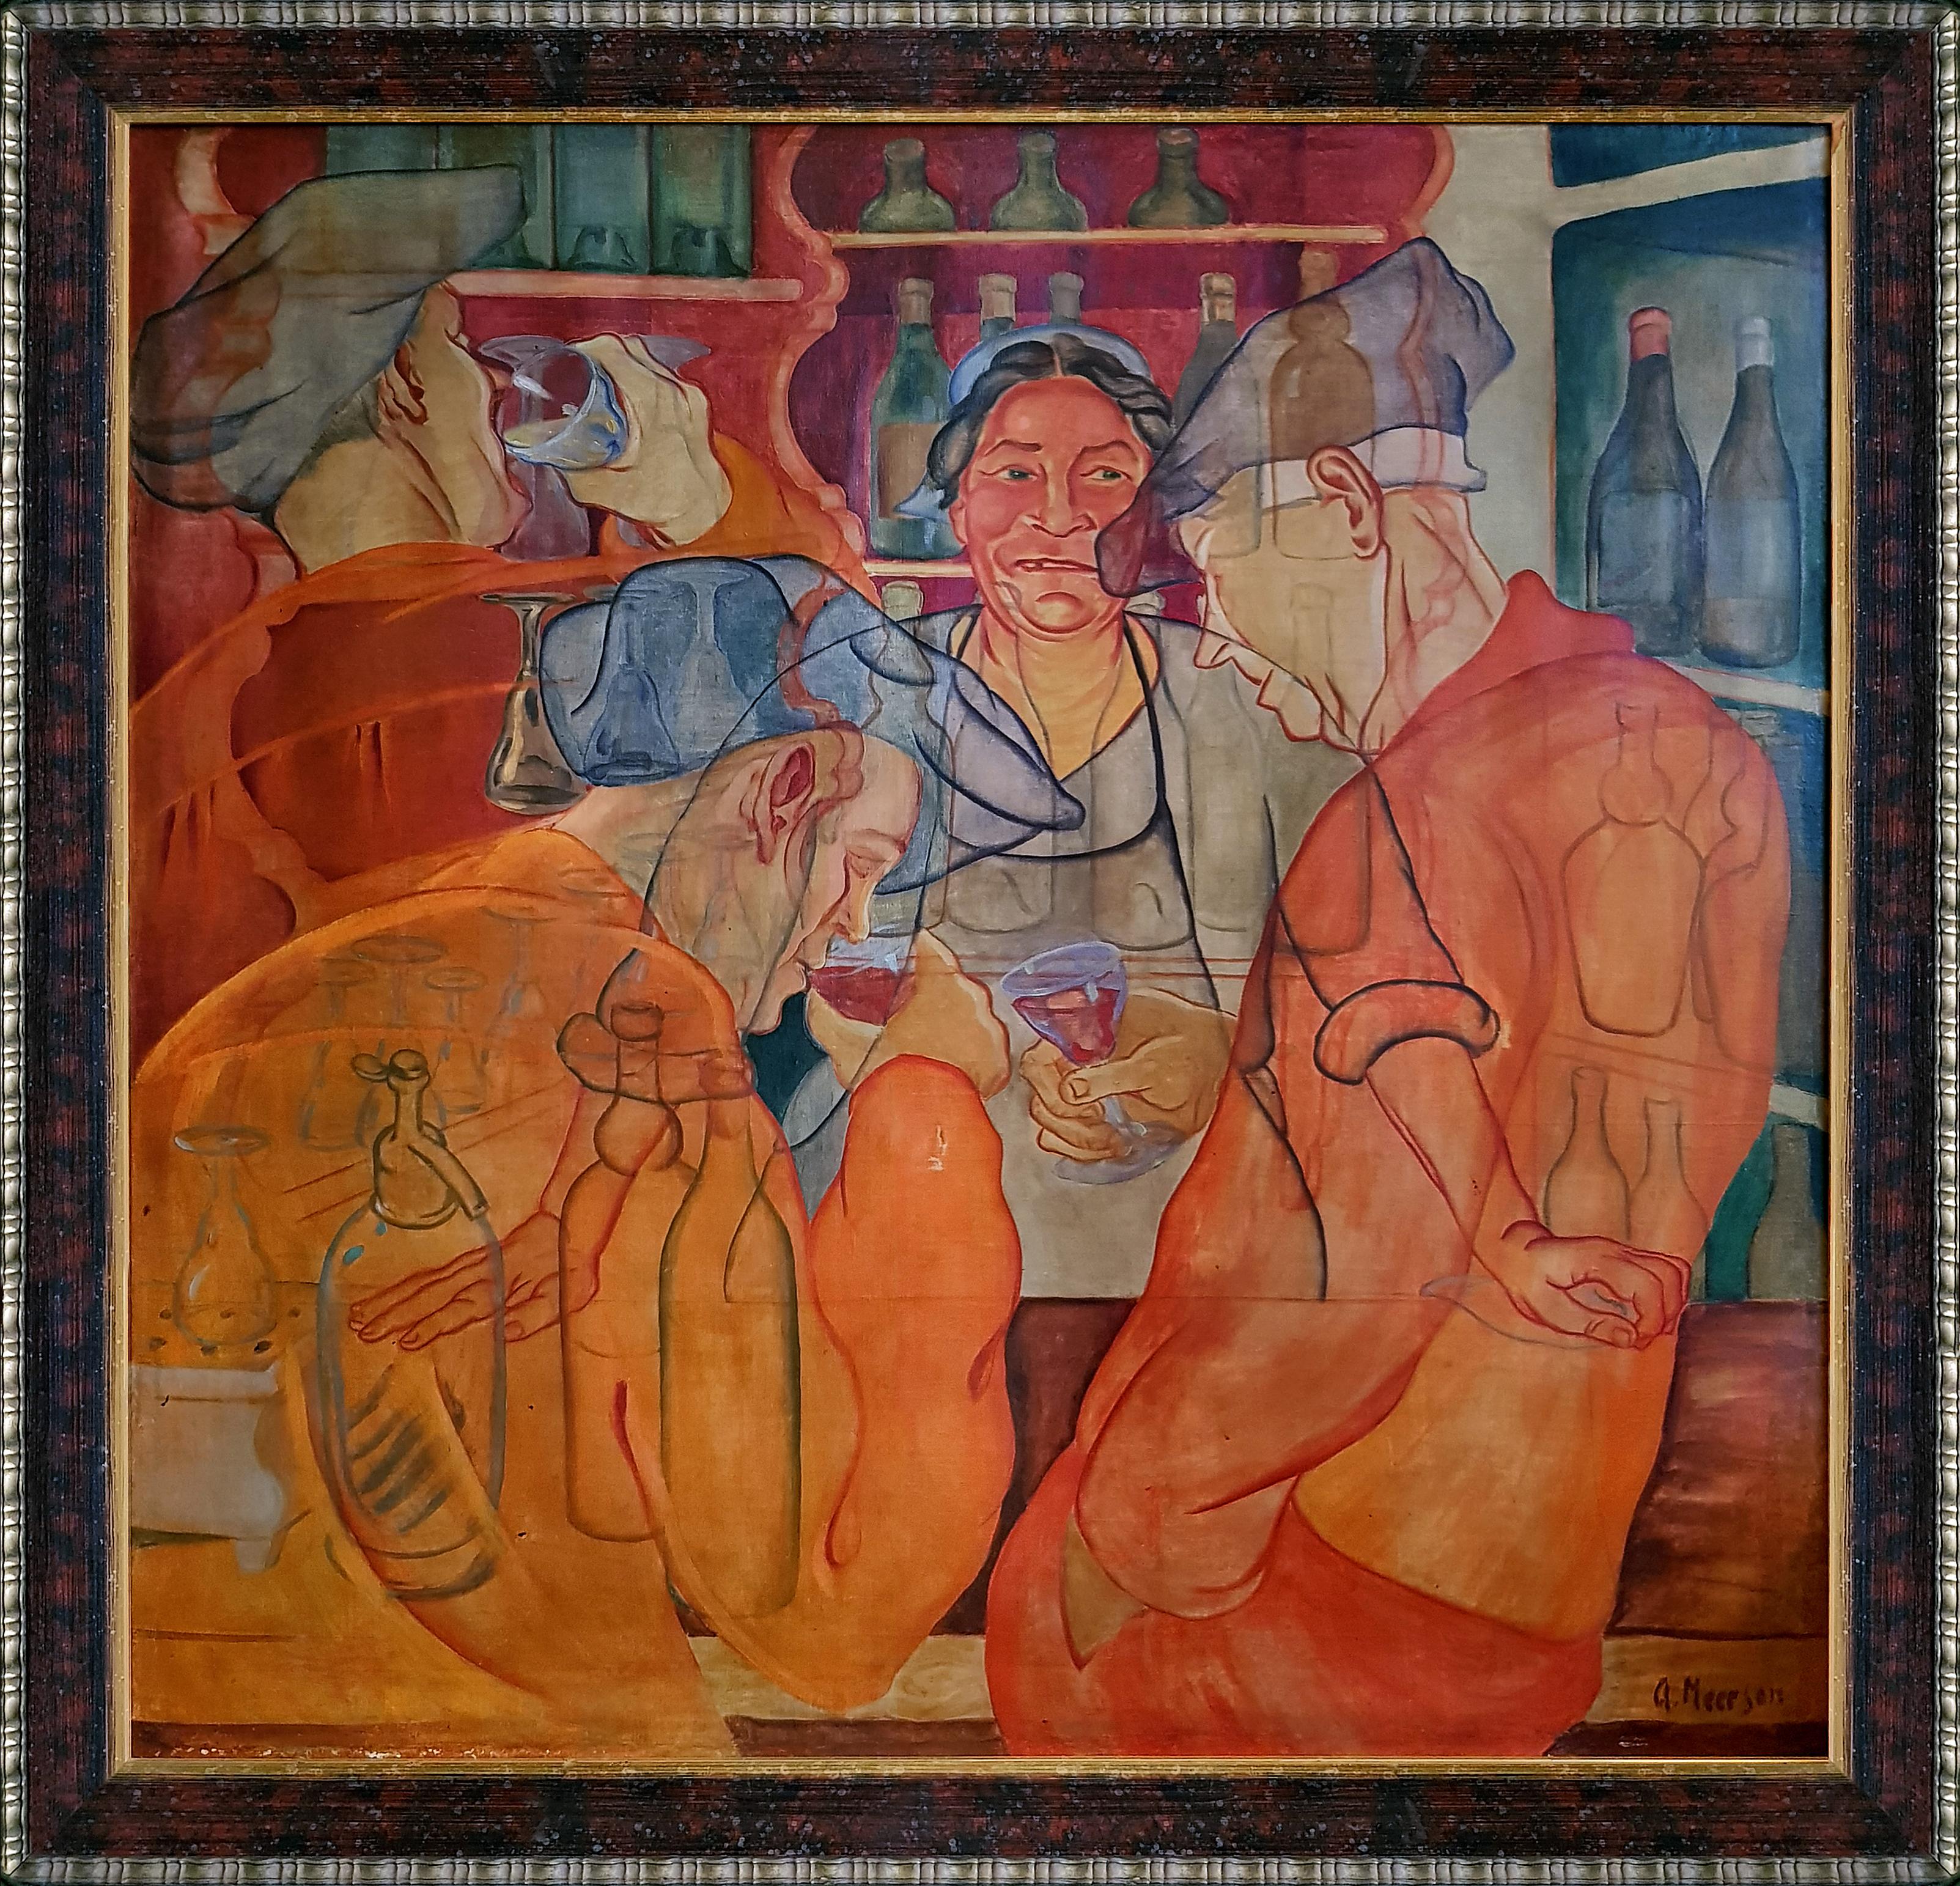 In The Pub - Innenraum Figuratives Gemälde in Öl auf Leinwand in Rot, Orange, Blau und Grau